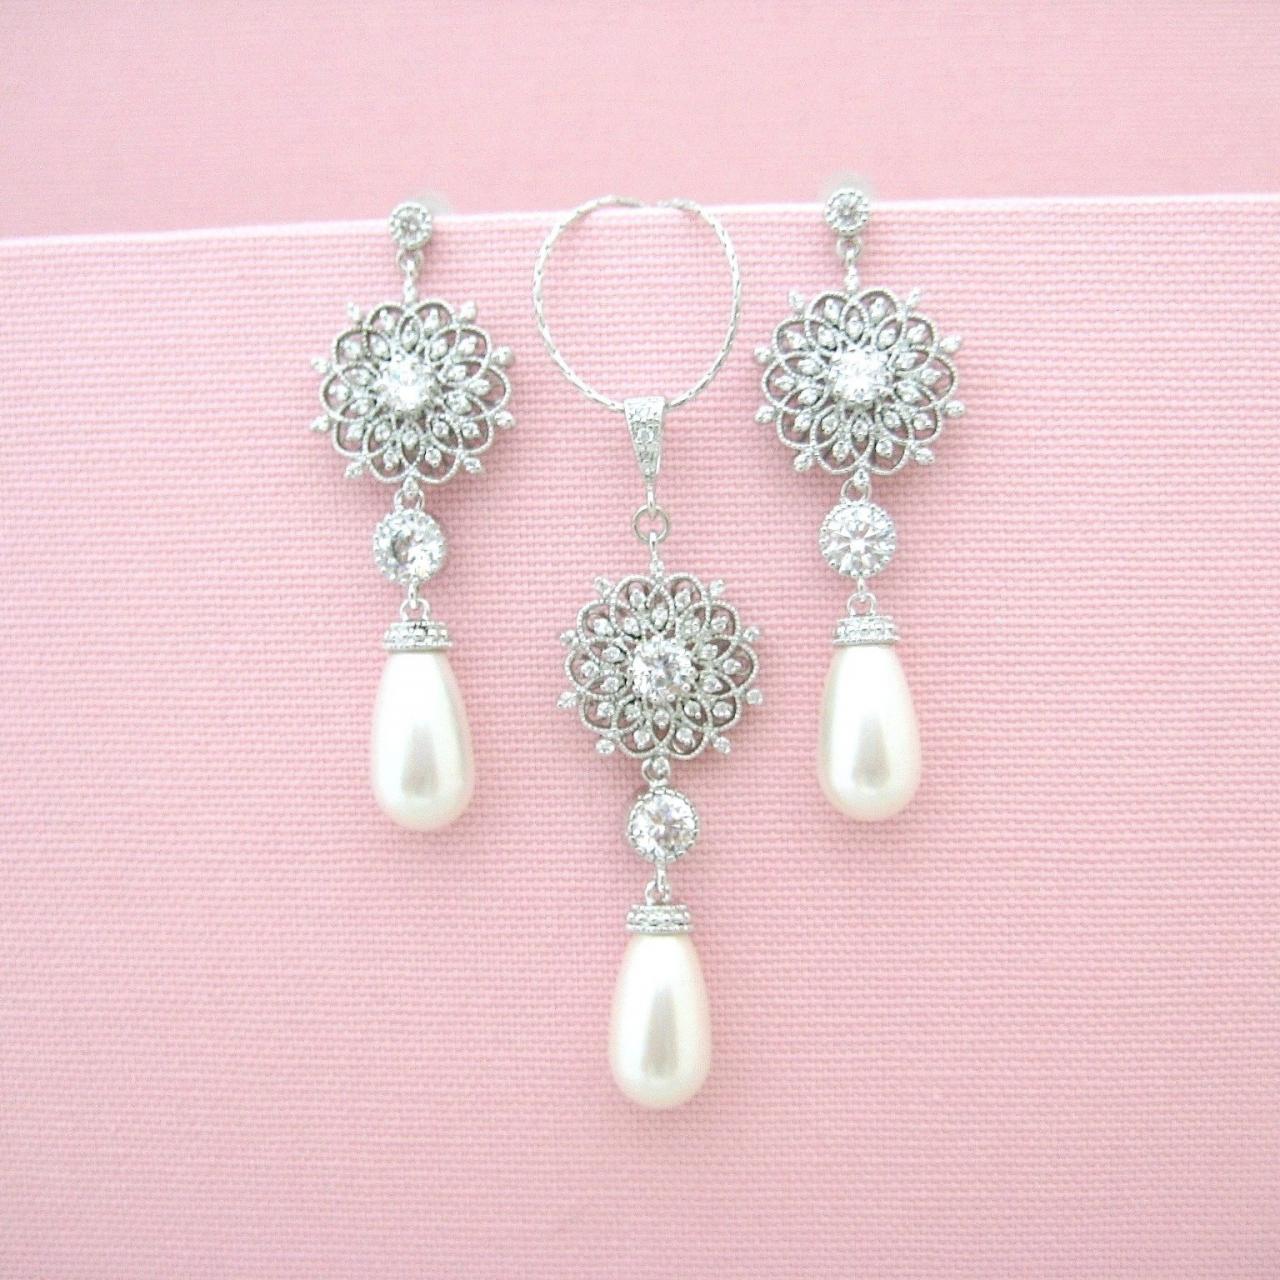 Wedding Jewelry Gift Set Chandelier Earrings Vintage Style Earrings Swarovski Pearl Bridal Long Earrings Bridesmaids Gift (e123)